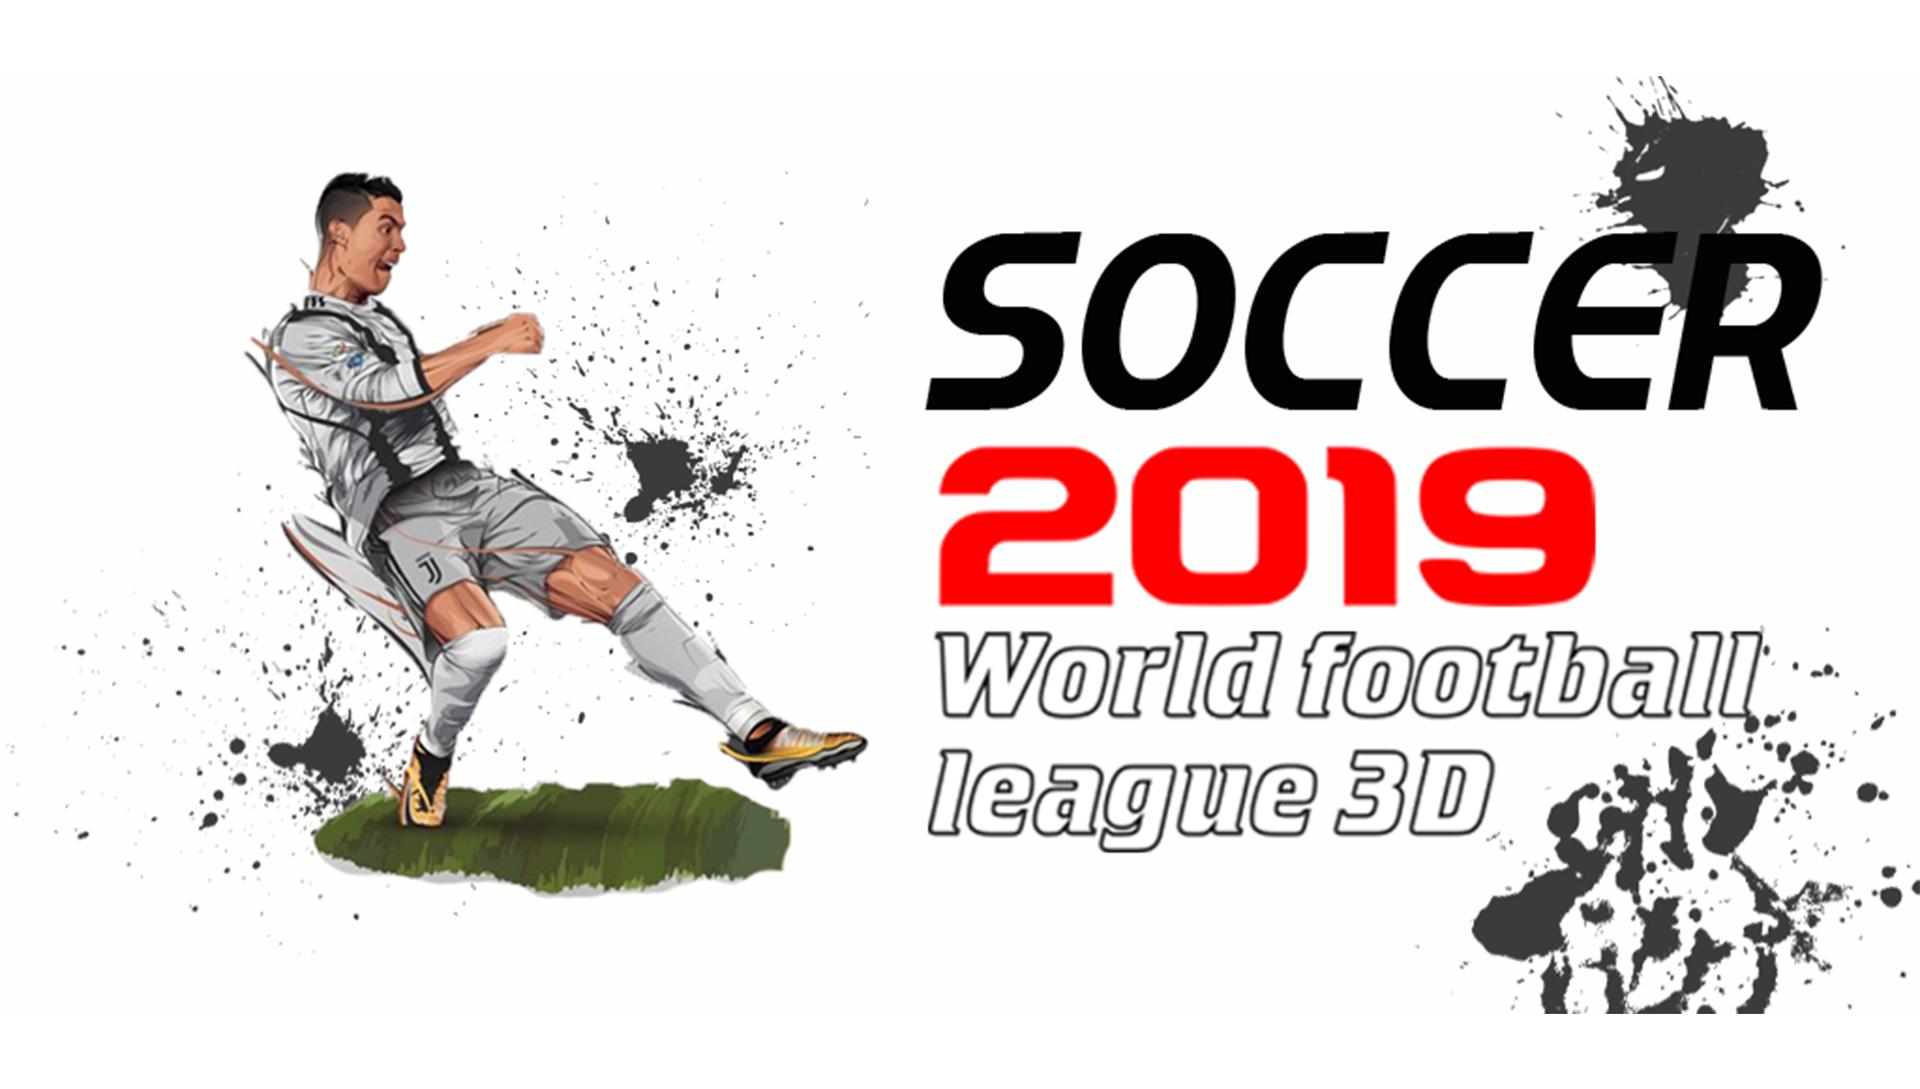 Soccer 2019 - World football league 3D